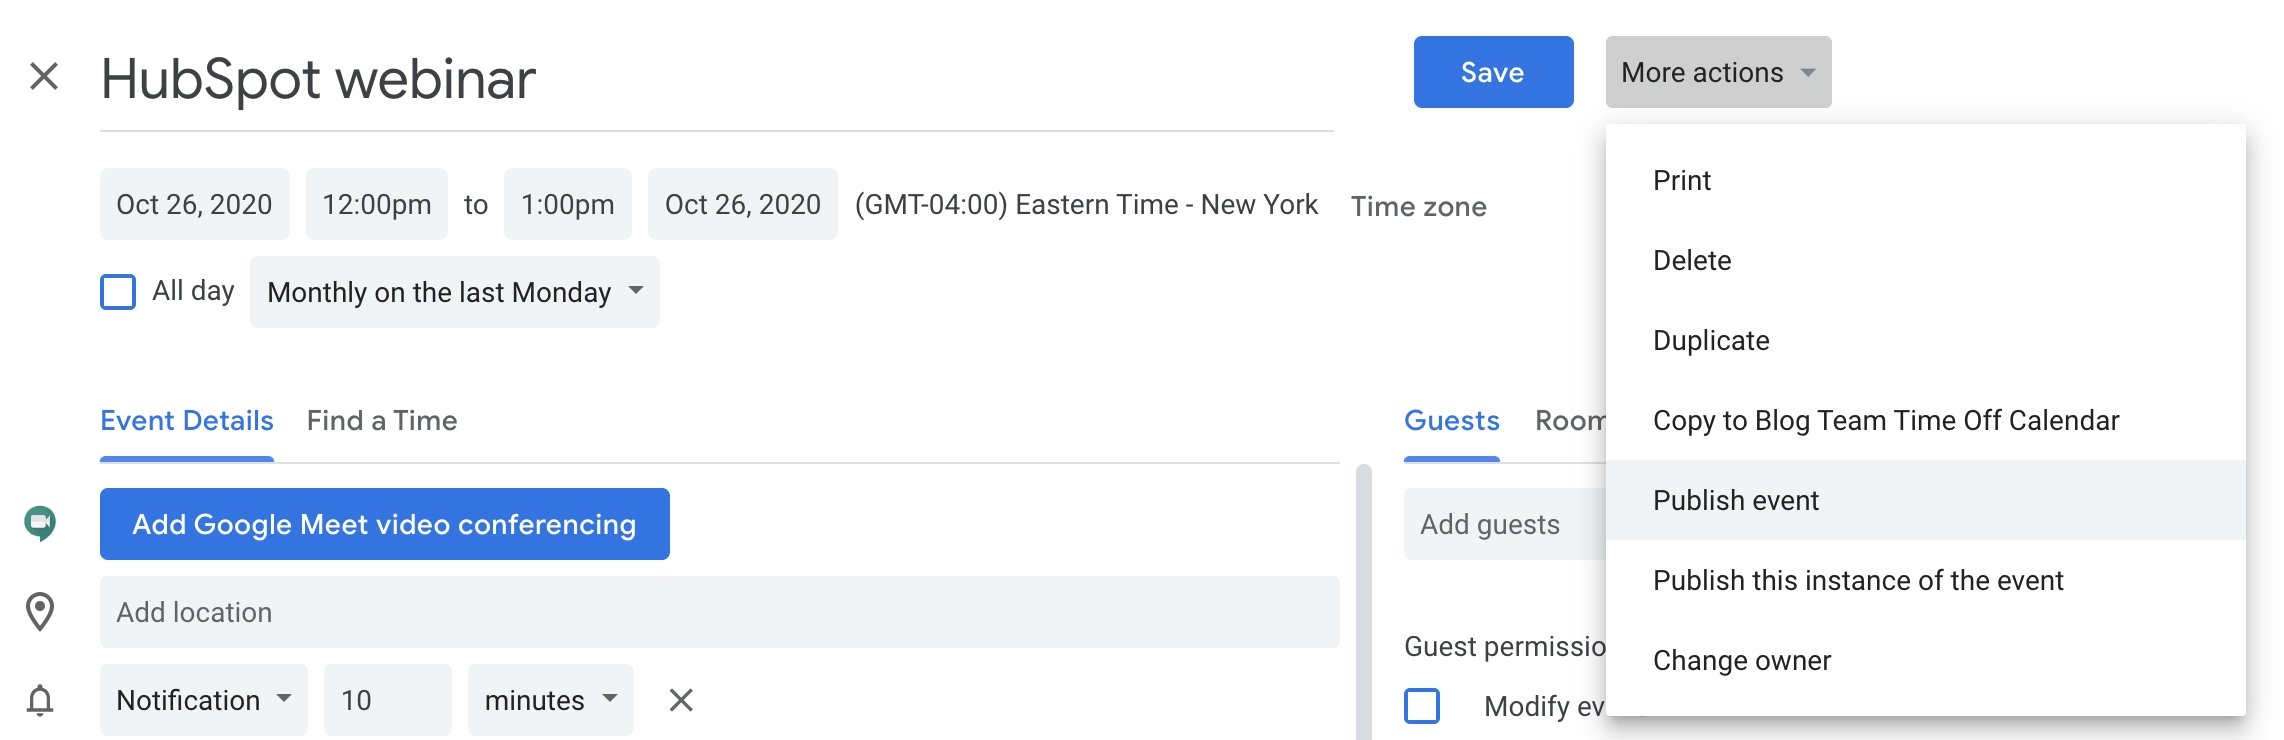 calendar invites 13.webp?width=2284&height=741&name=calendar invites 13 - How to Send a Calendar Invite with Google Calendar, Apple Calendar &amp; Outlook